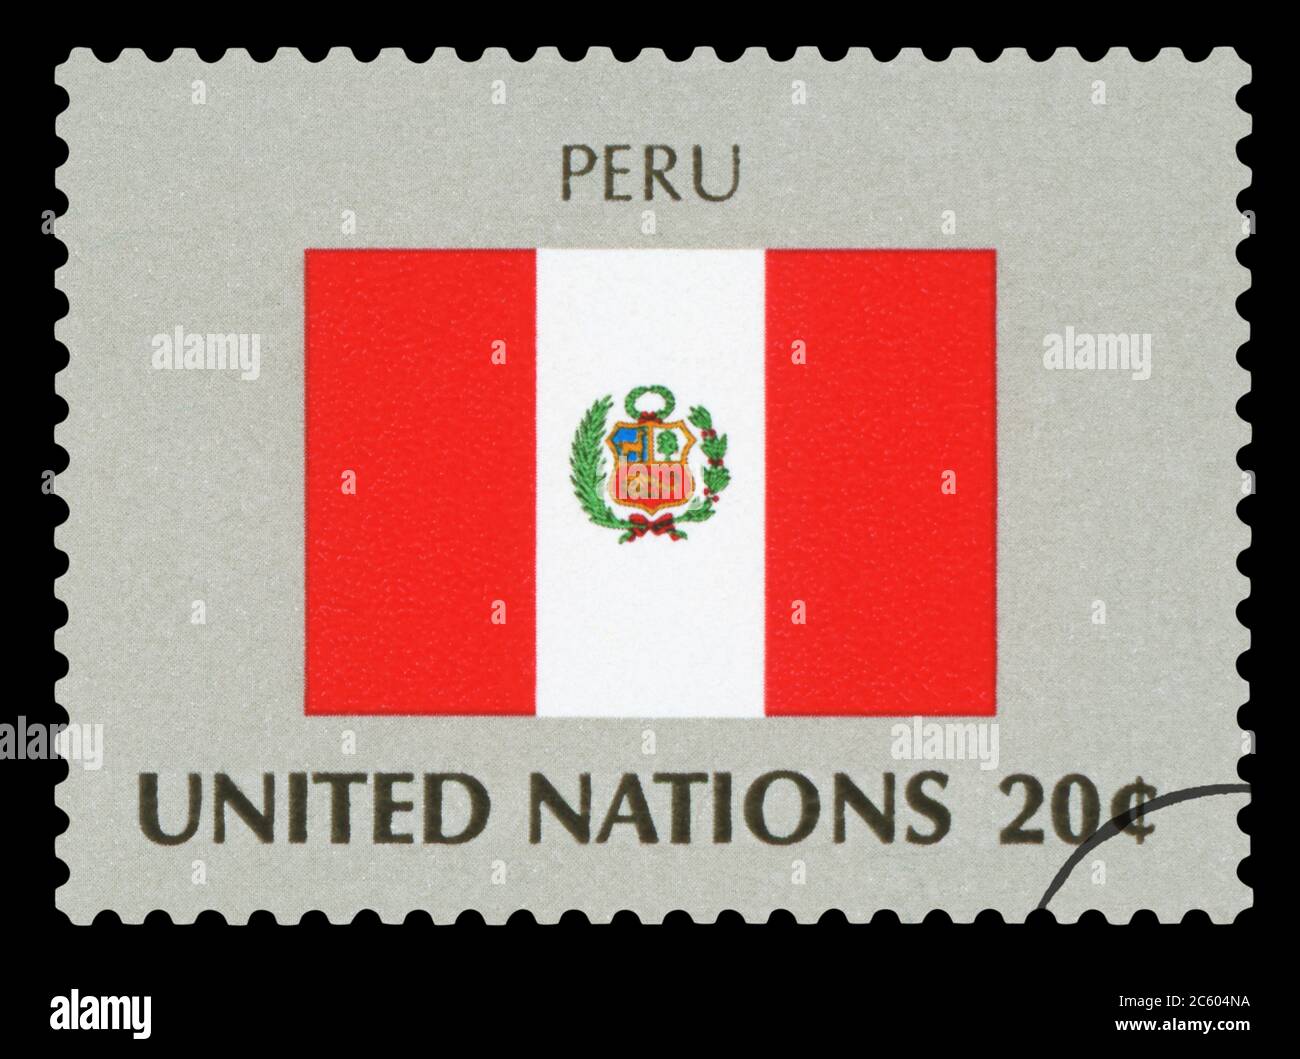 PERU - Postage Stamp of Peru national flag, Series of United Nations, circa 1984. Stock Photo